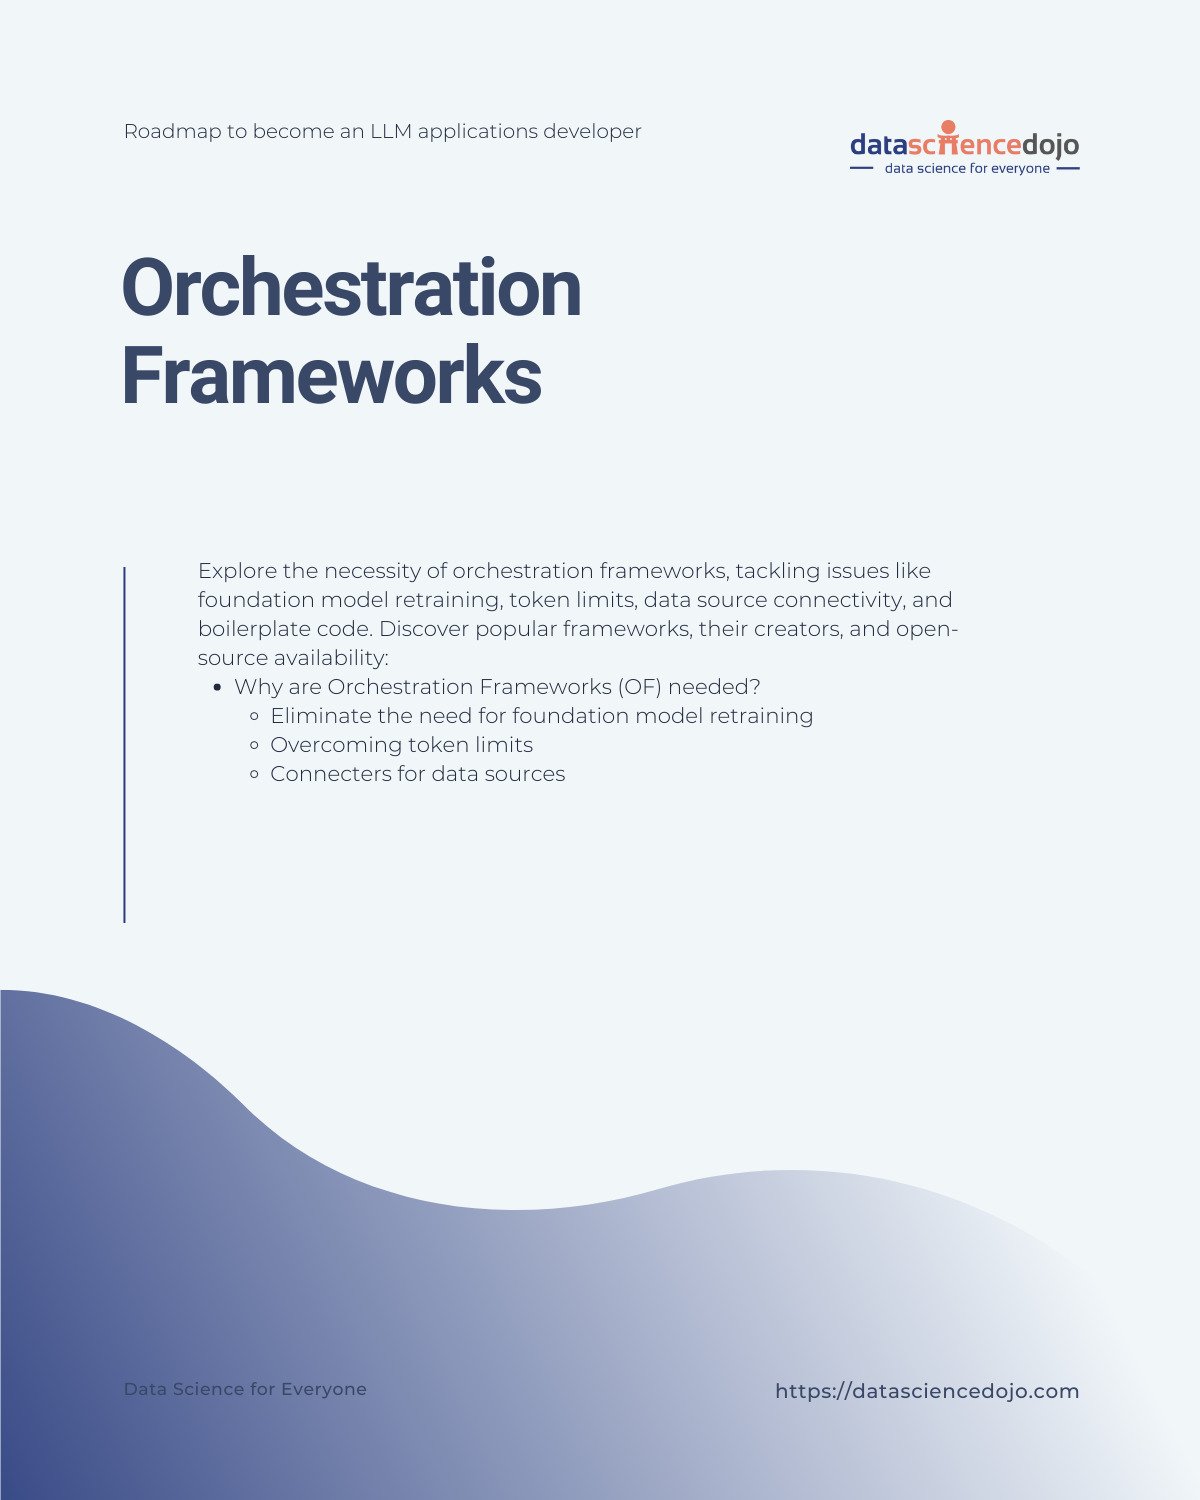 Orchestration frameworks - LLM Bootcamp Data Science Dojo